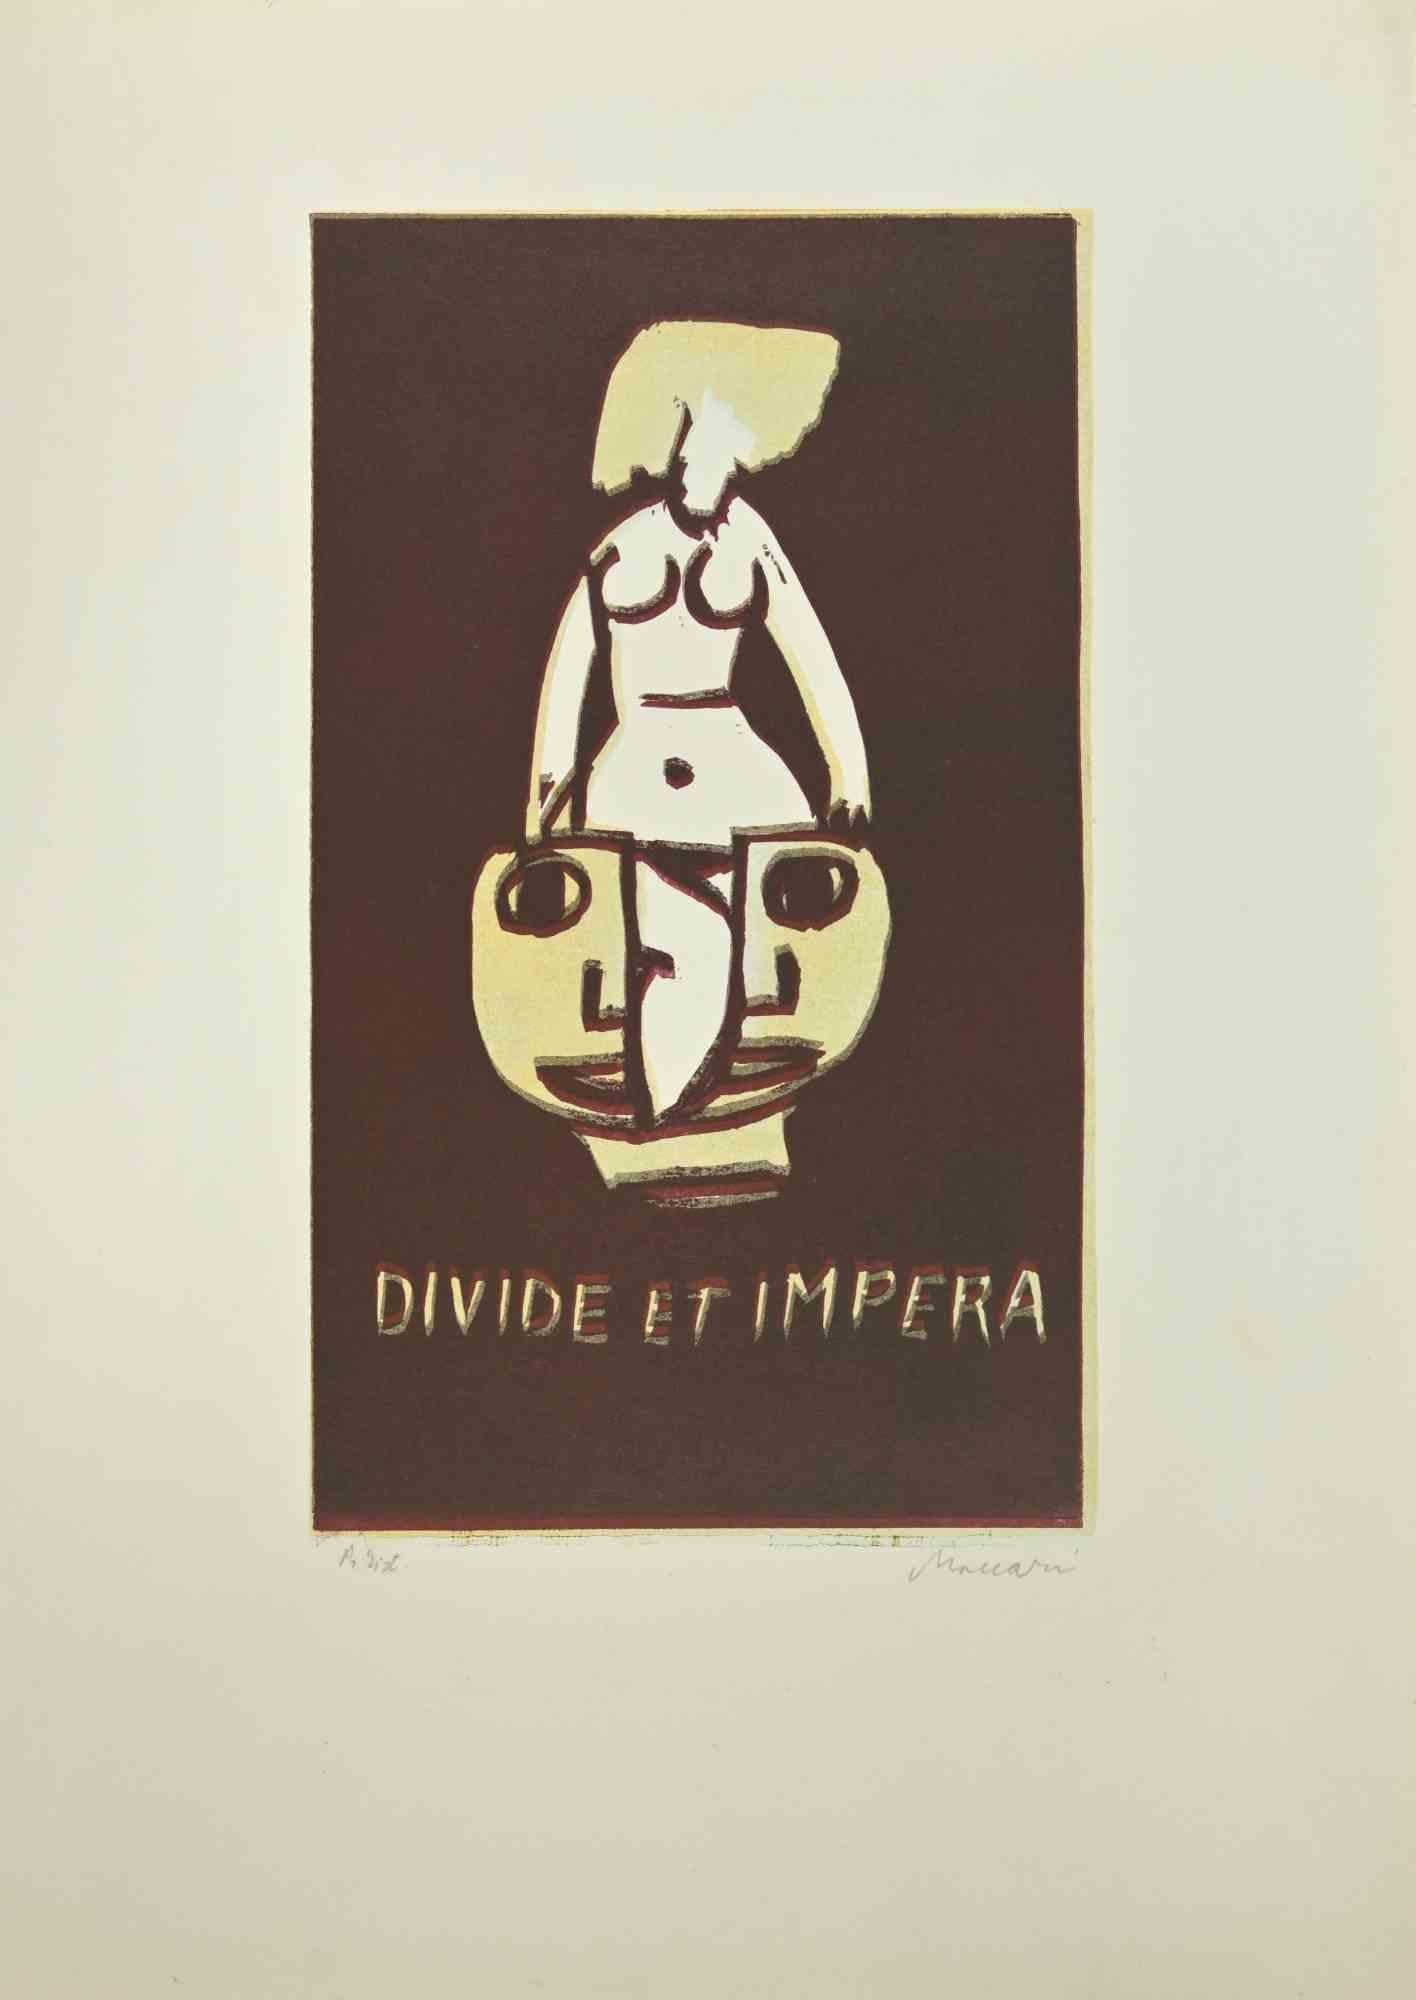 Divide et Impera - Linocut by Mino Maccari - 1960s